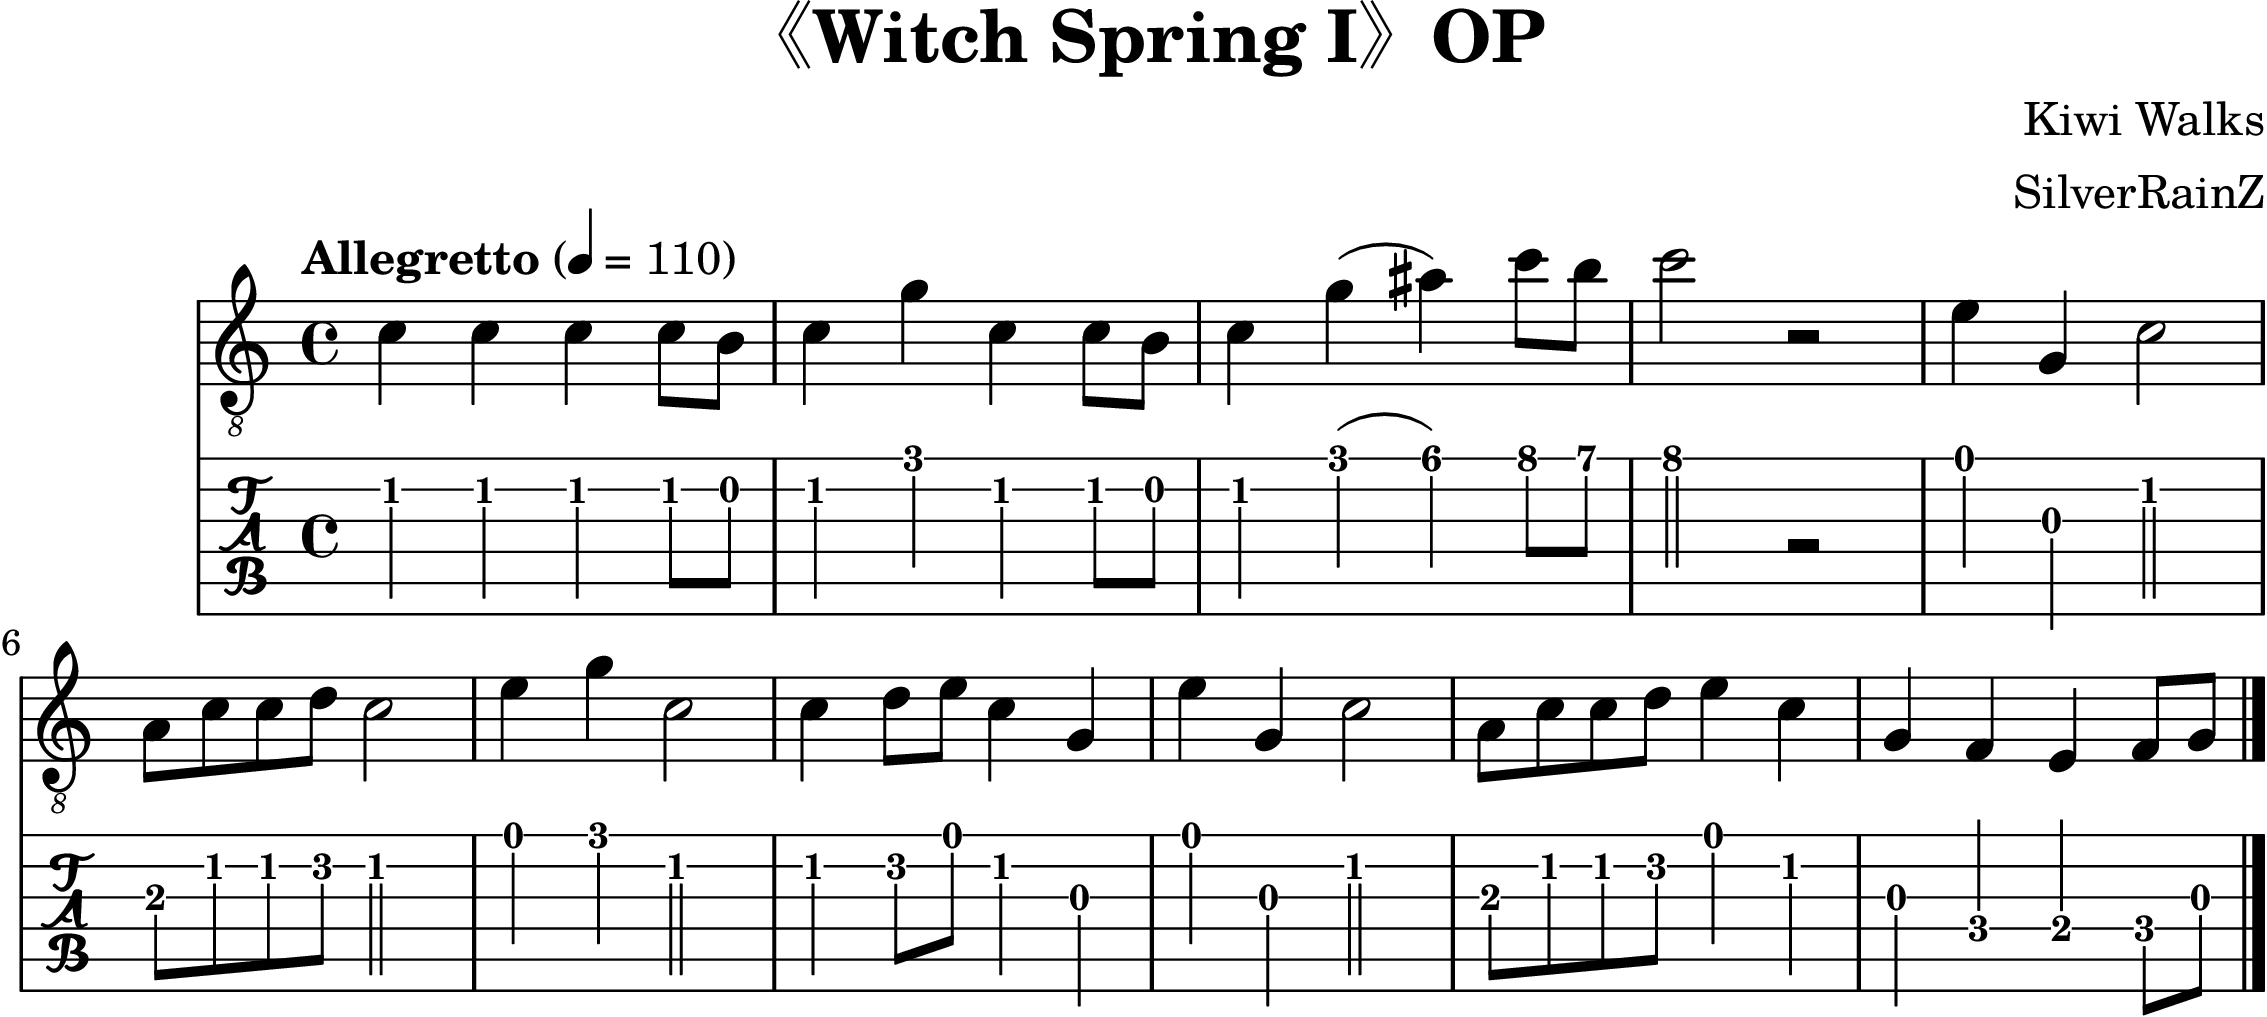 \version "2.20.0"
\header {
  title = "《Witch Spring I》OP"
  composer = "Kiwi Walks"
  arranger = "SilverRainZ"
}

symbols =  {
  \time 4/4
  \tempo  "Allegretto" 4 = 110

  % 1
  c'4 c' c' c'8 b8
  c'4 g' c' c'8 b8
  c'4 g' (ais') c''8 b'8
  c''2 r2

  %14
  e'4 g c'2
  a8 c'8 c'8 d'8 c'2

  e'4 g' c'2
  c'4 d'8 e'8 c'4 g

  e'4 g c'2
  a8 c'8 c'8 d'8 e'4 c'

  g4 f e f8 g8

  \bar "|."
}

\score {
  <<
    \new Staff \with {midiInstrument = "acoustic guitar (nylon)"} {
      \clef "G_8"
      \symbols
    }
    \new TabStaff {
      \tabFullNotation
      \symbols
    }
  >>

  \midi { }
  \layout { }
}